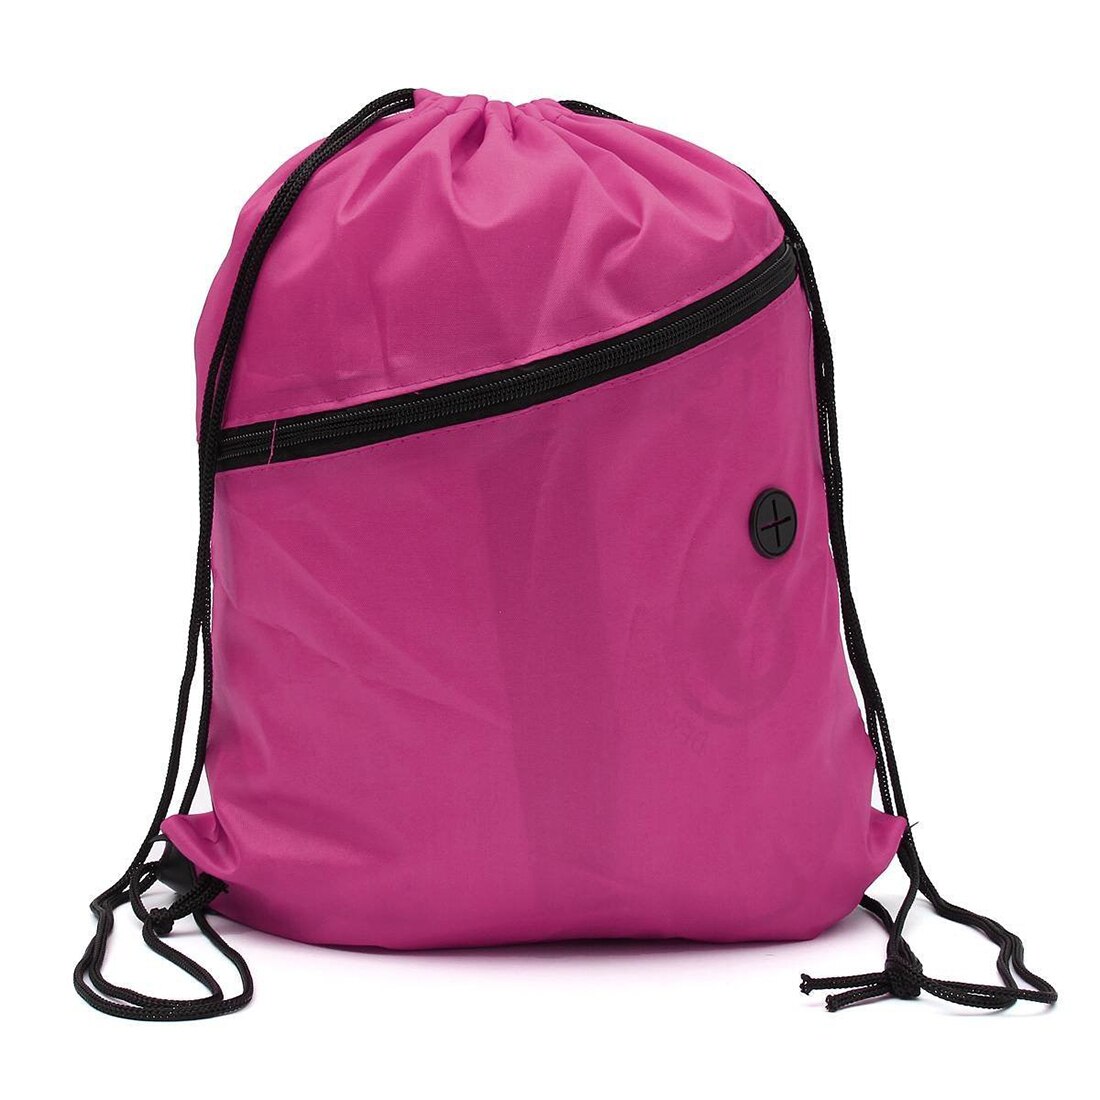 2018 HOT Waterproof Famous Brand backpack beach drawstring bag Solid backpacks for Women Nylon bag - ebowsos